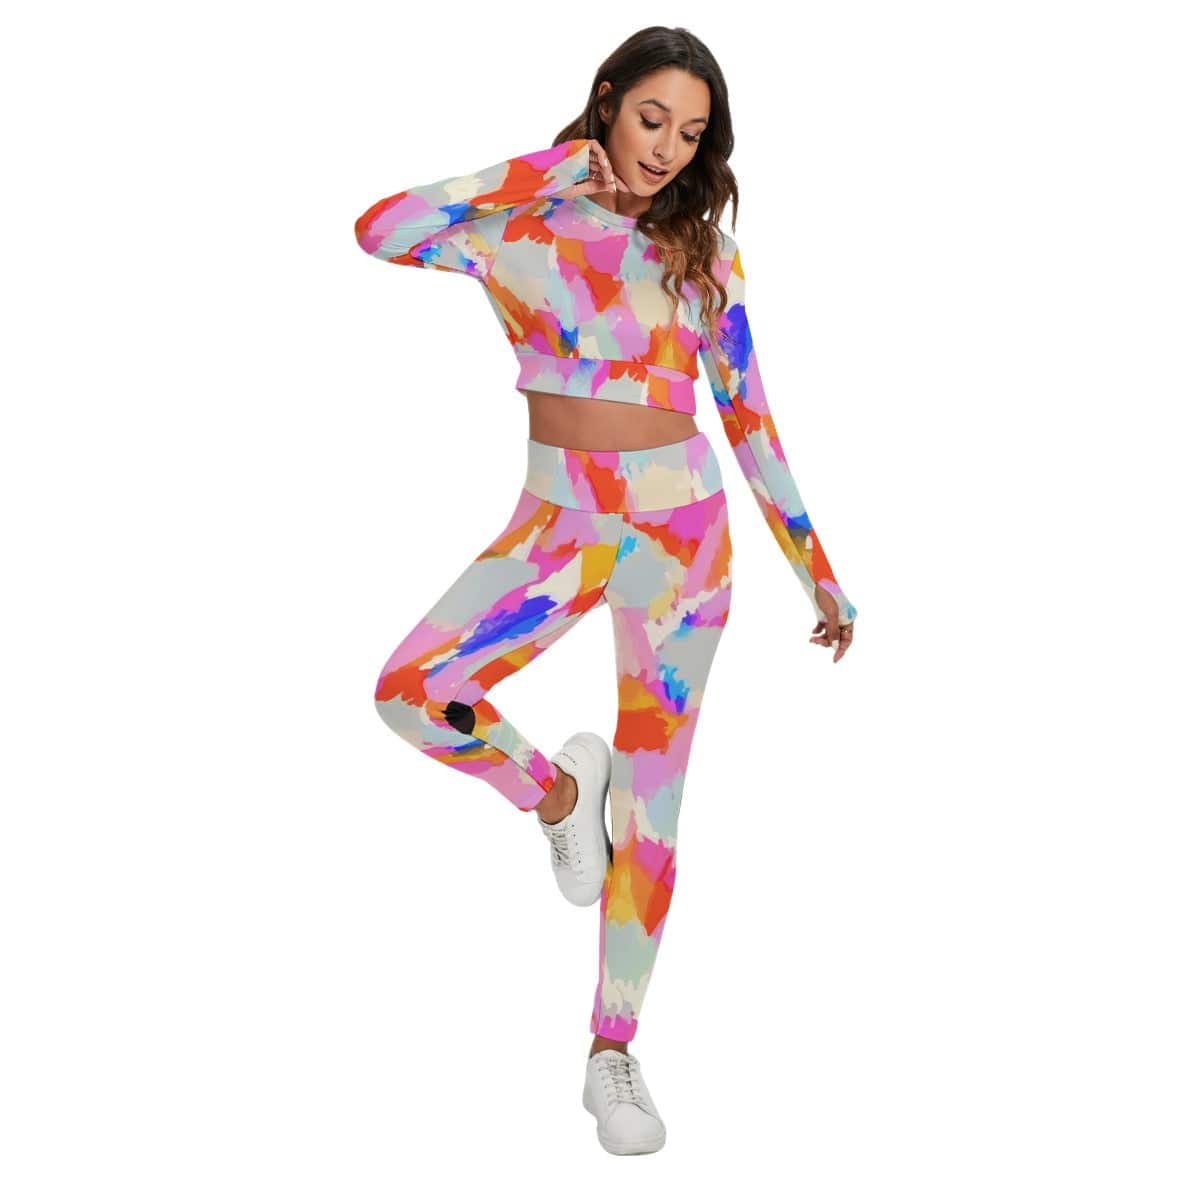 Yoycol activewear 2XL / Melon Colors Bright Mod - Women's Sport 2 pc Set